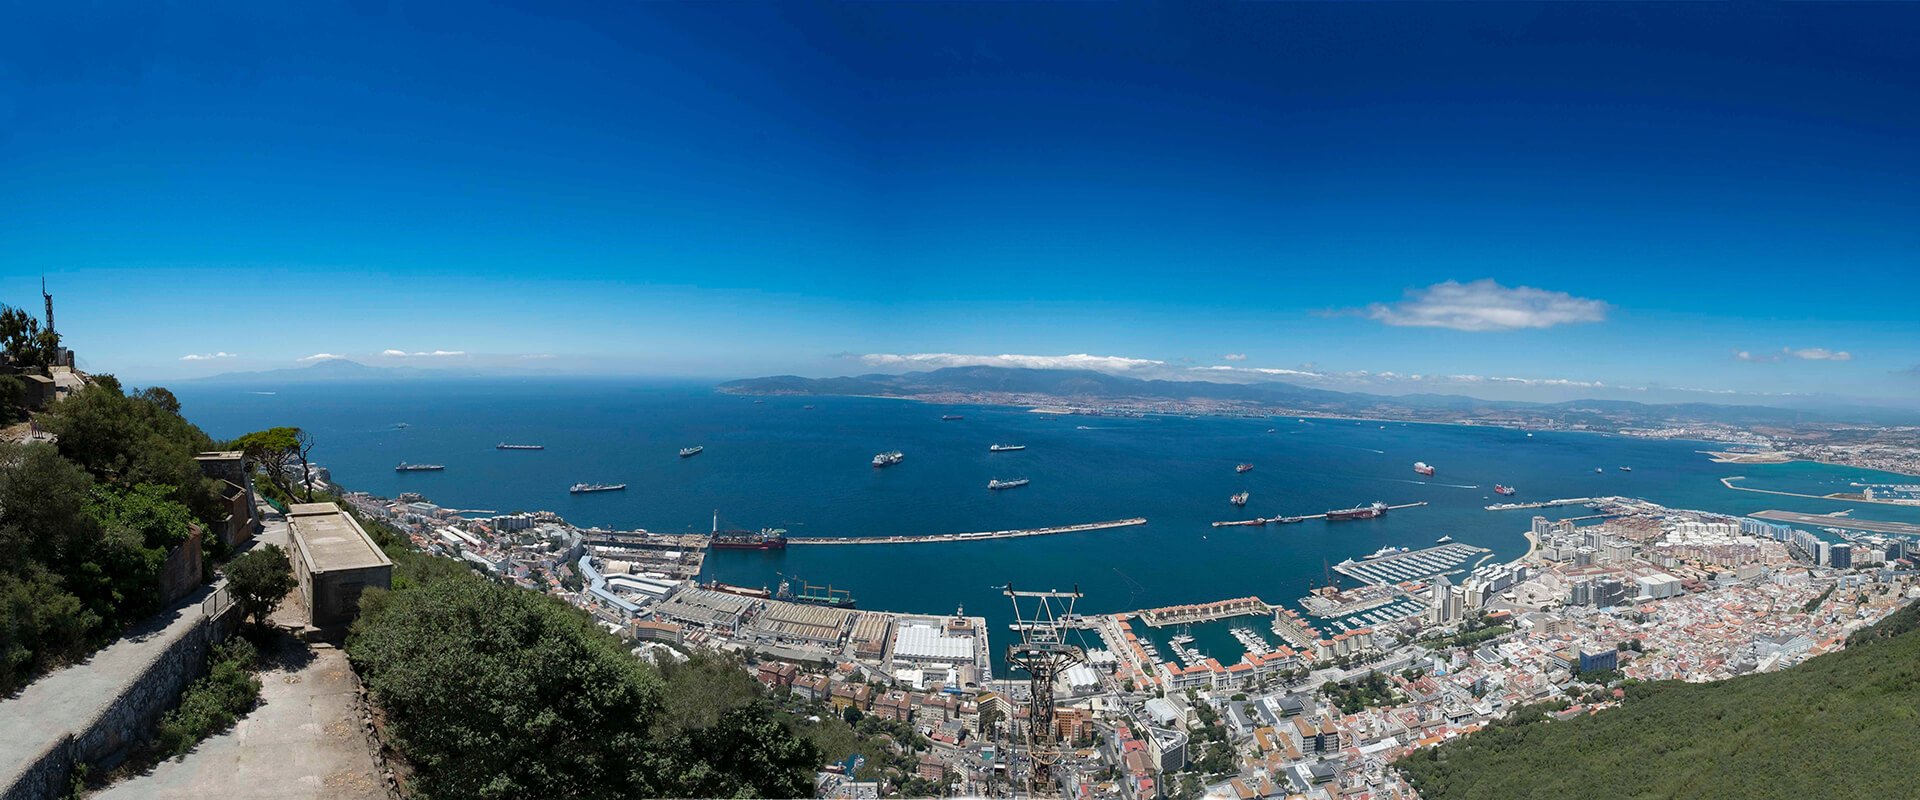 Gibilterra-Cartagena 33